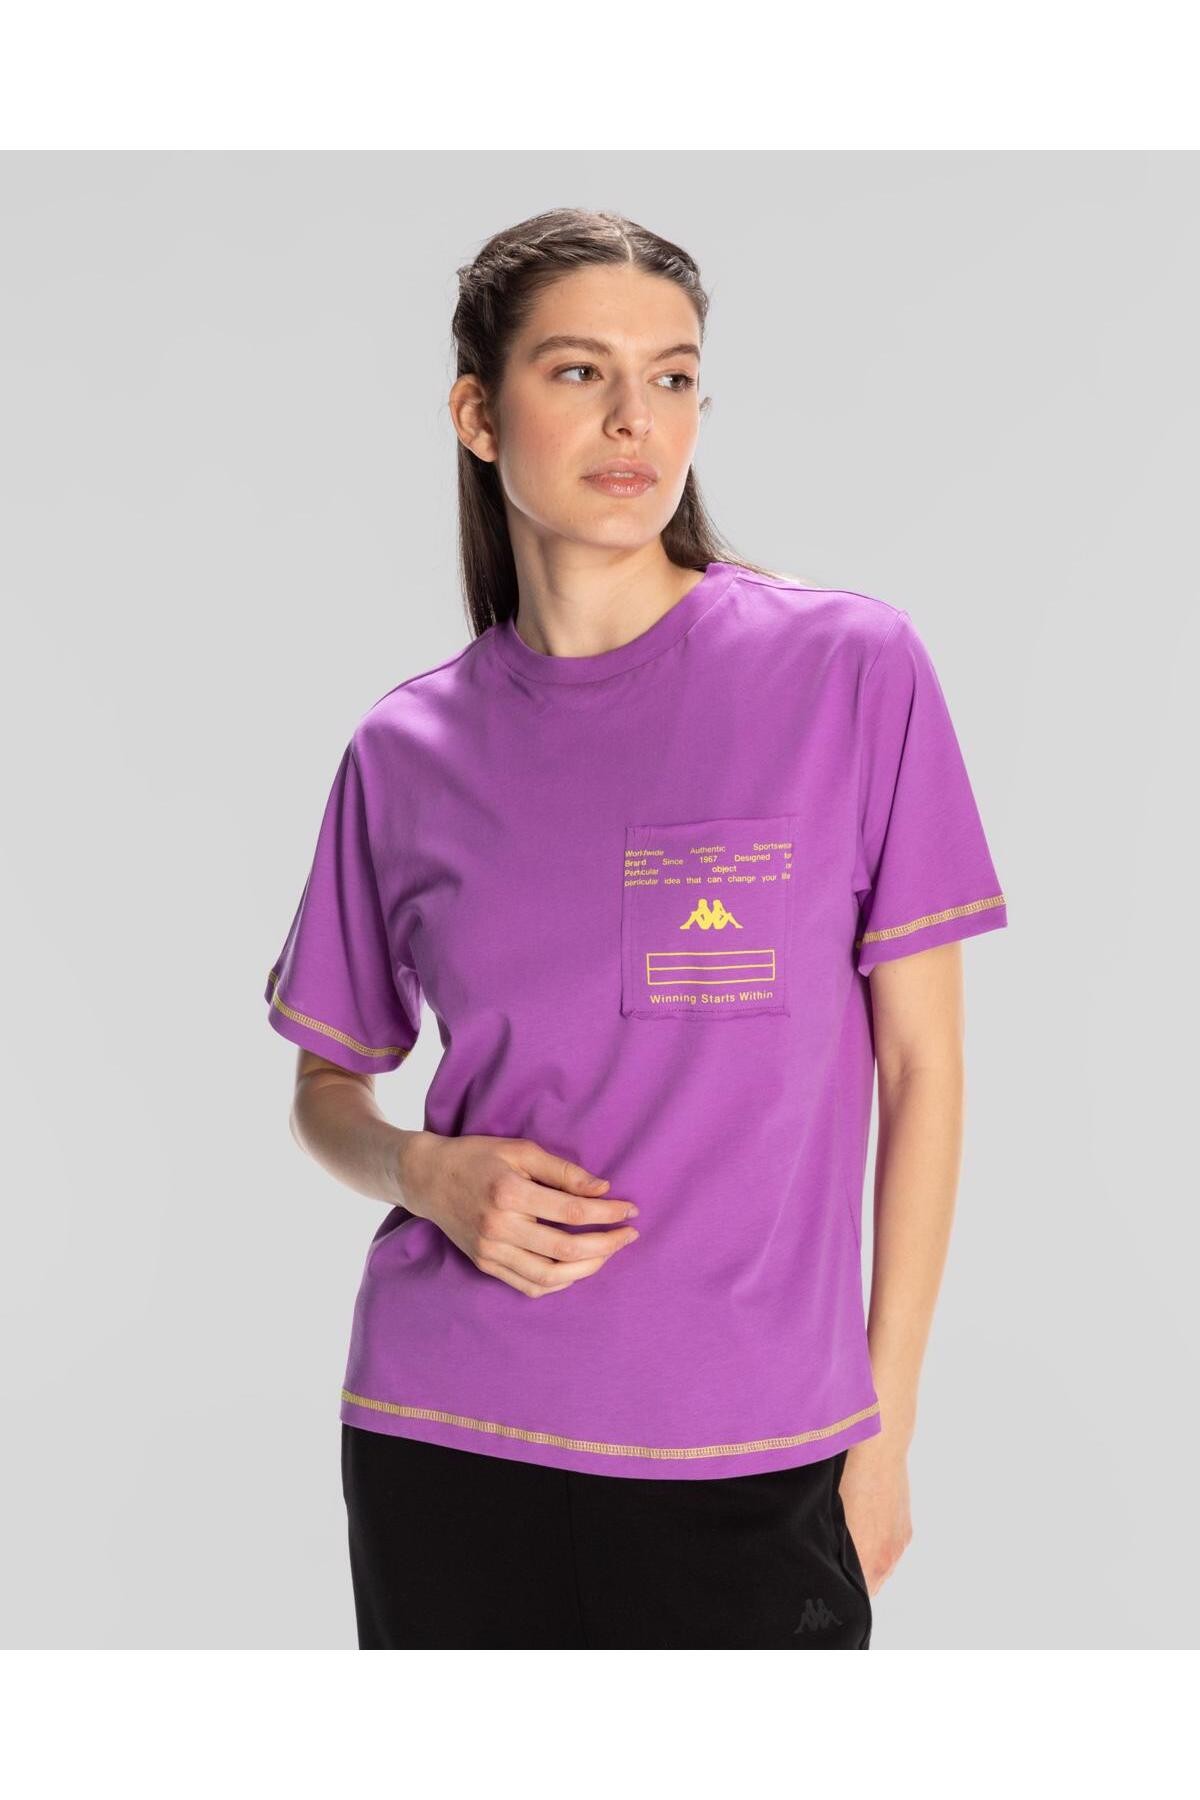 Kappa Authentic Kage T-Shirt Kadın Mor Tişört